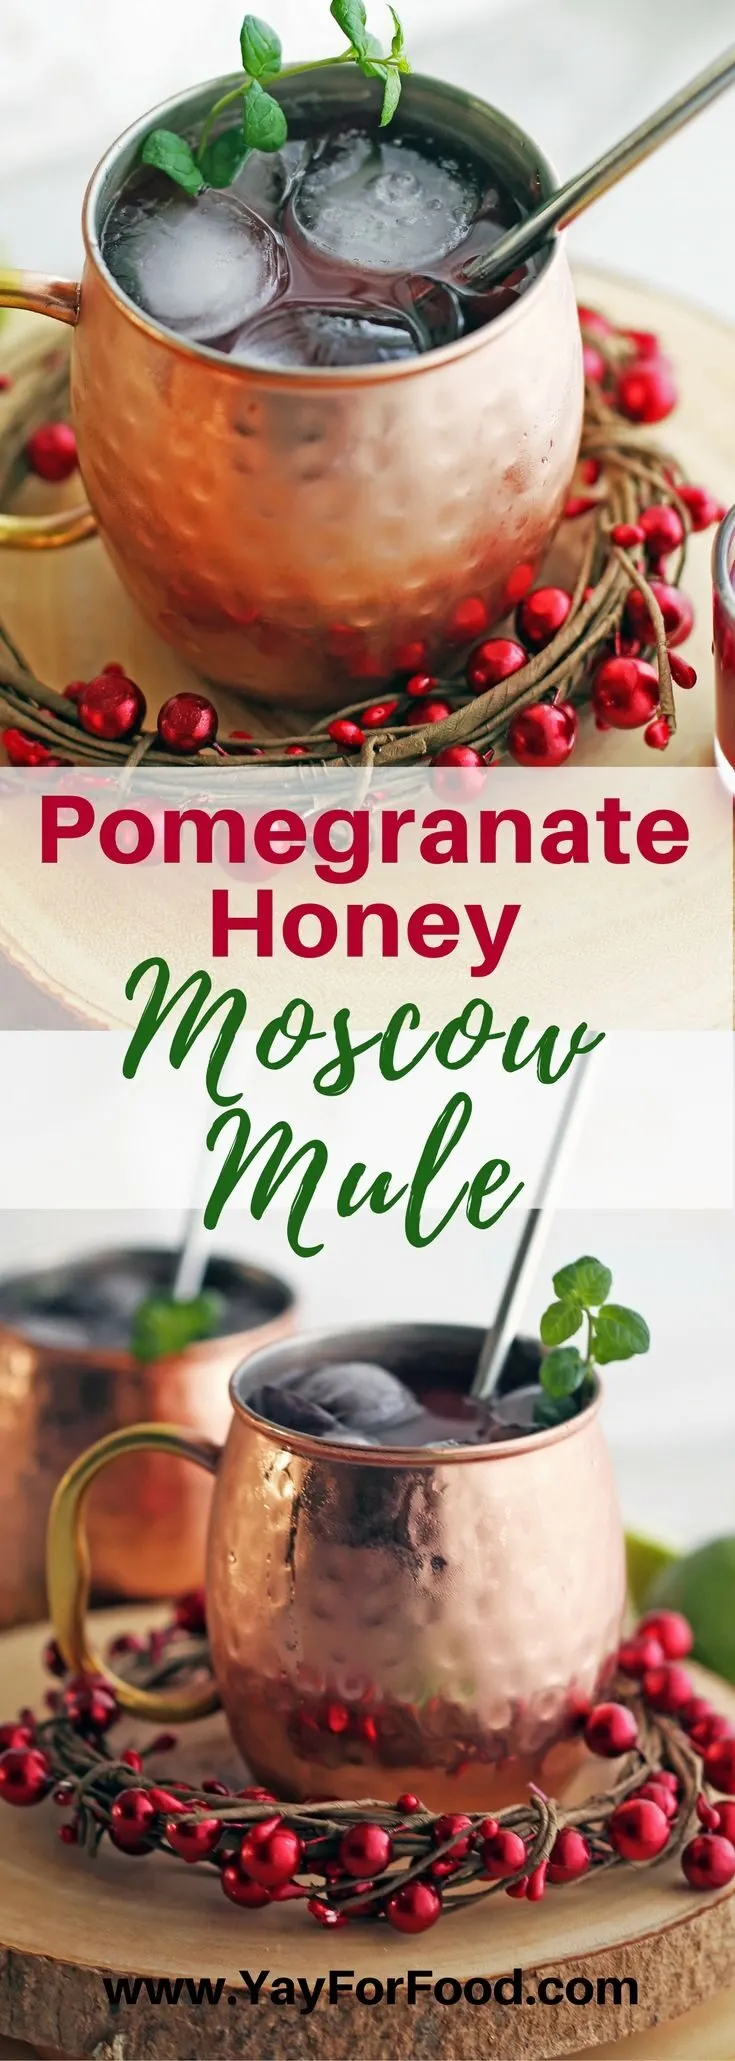 Pomegranate Honey Moscow Mule Yay